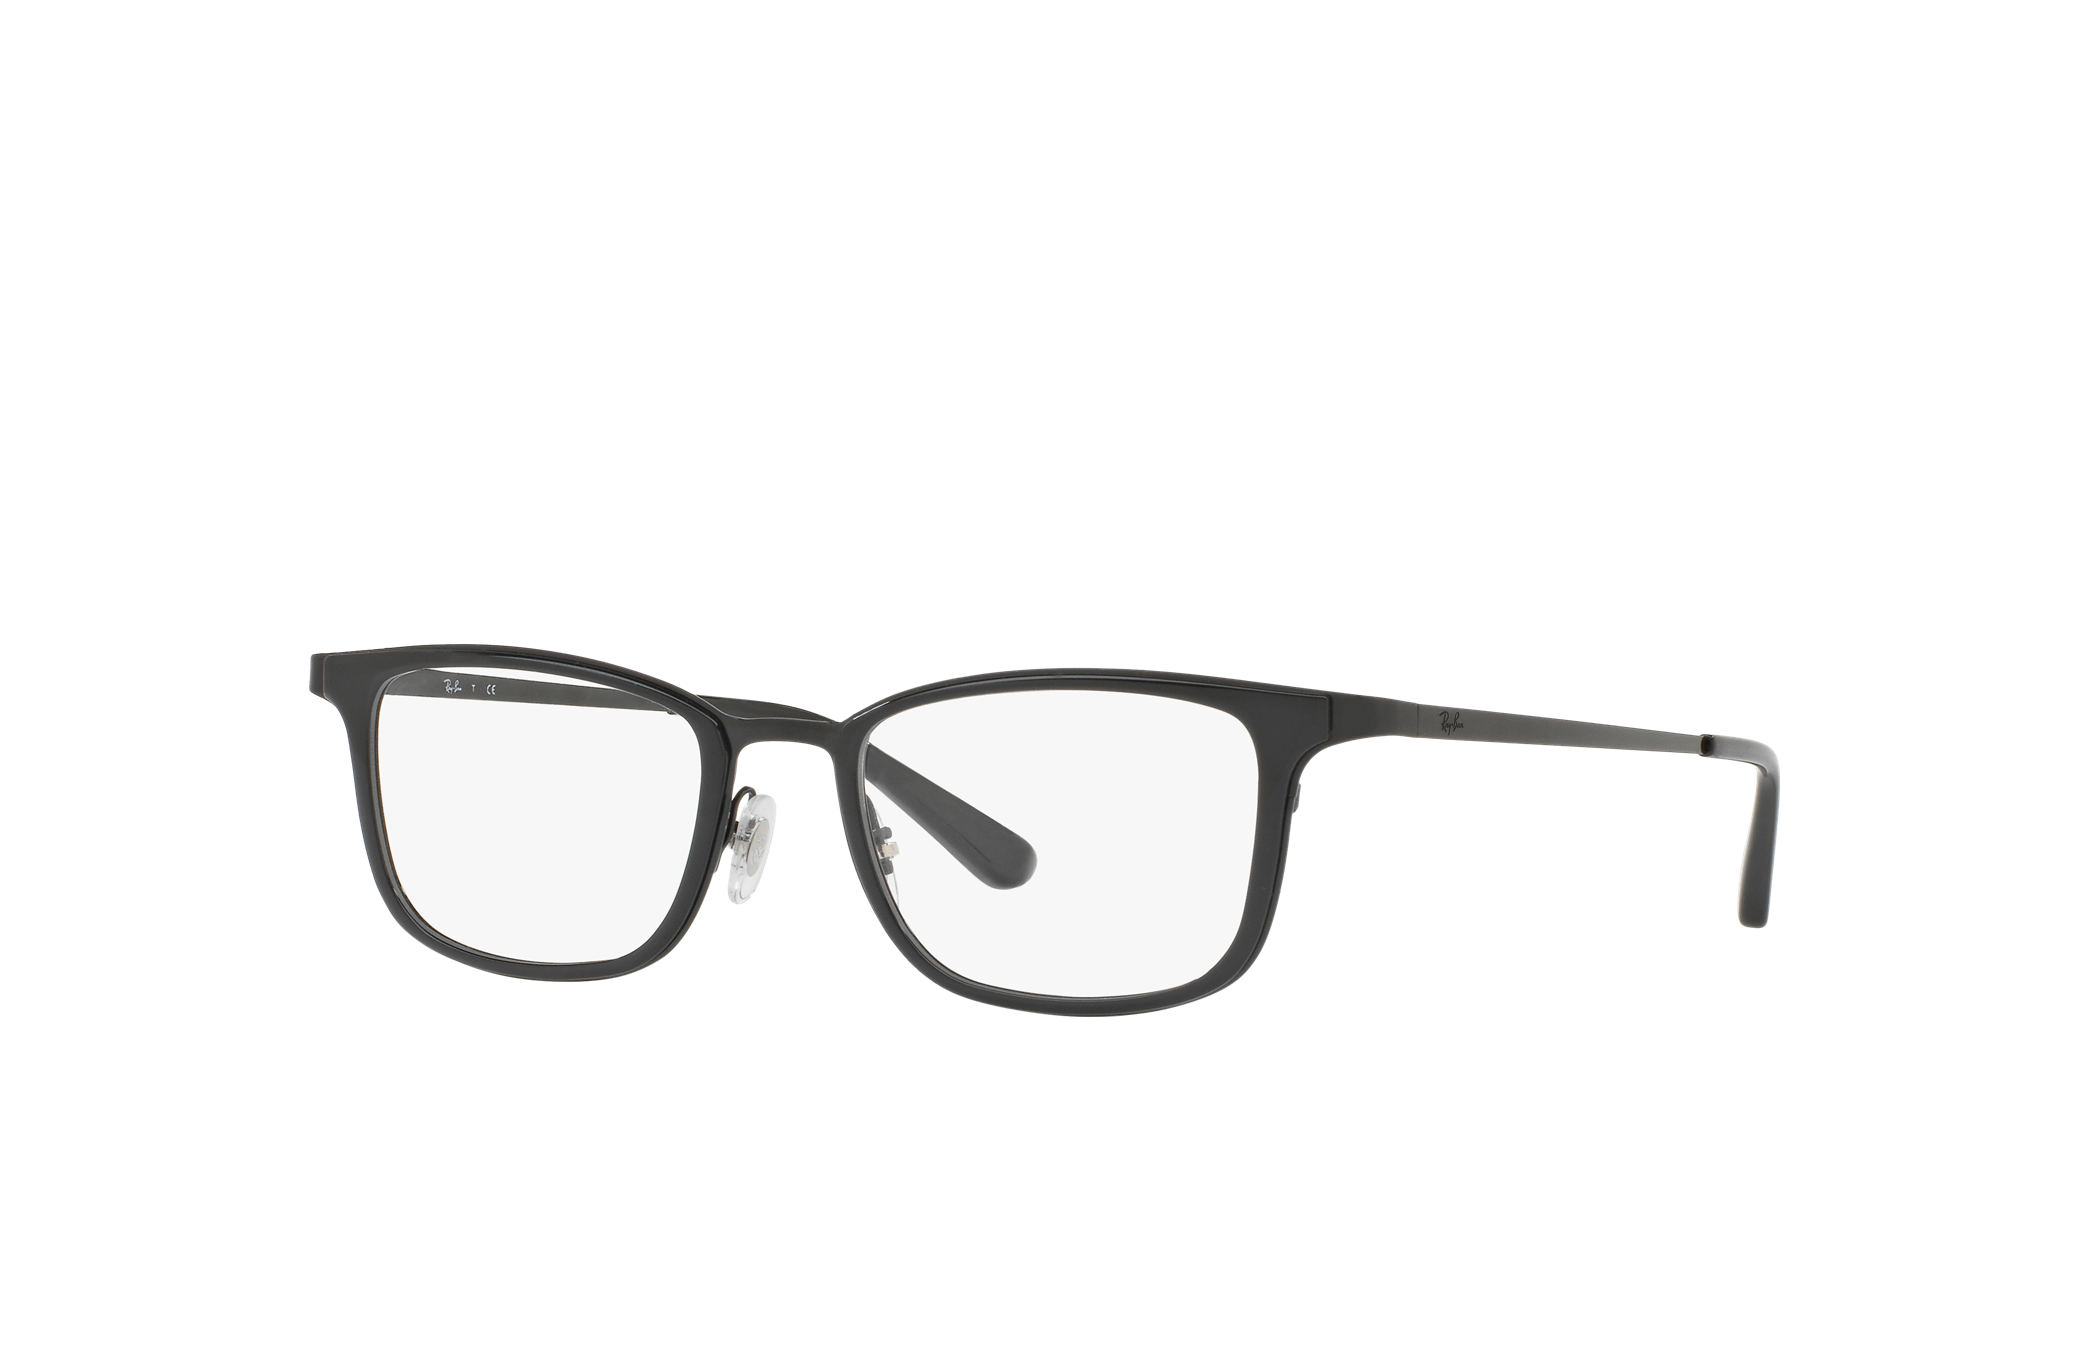 Rb6373m Eyeglasses with Black Frame - RB6373M | Ray-Ban®